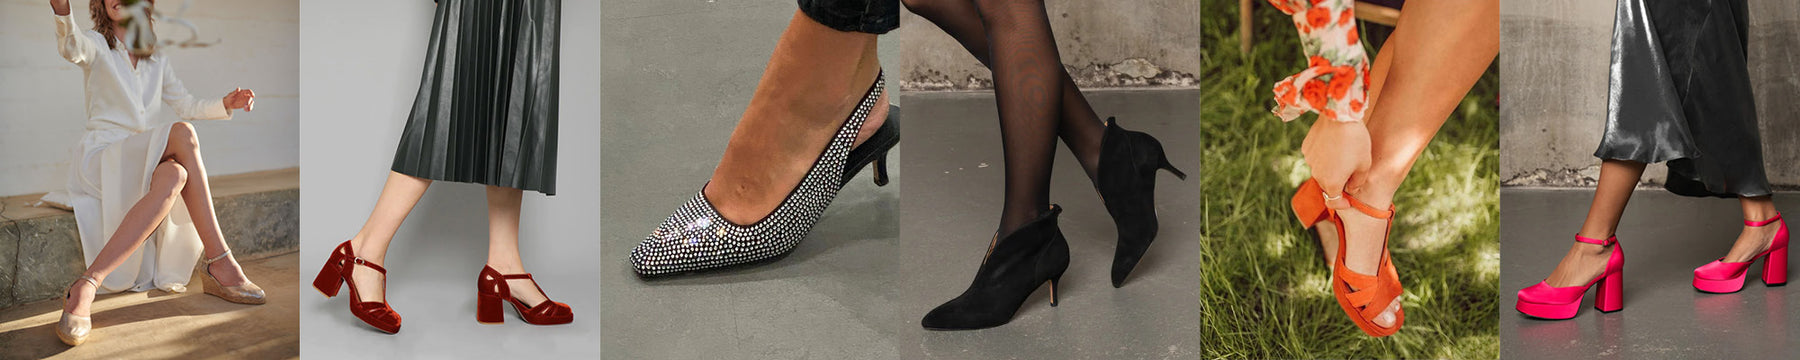 Woman » Shoes » Heels